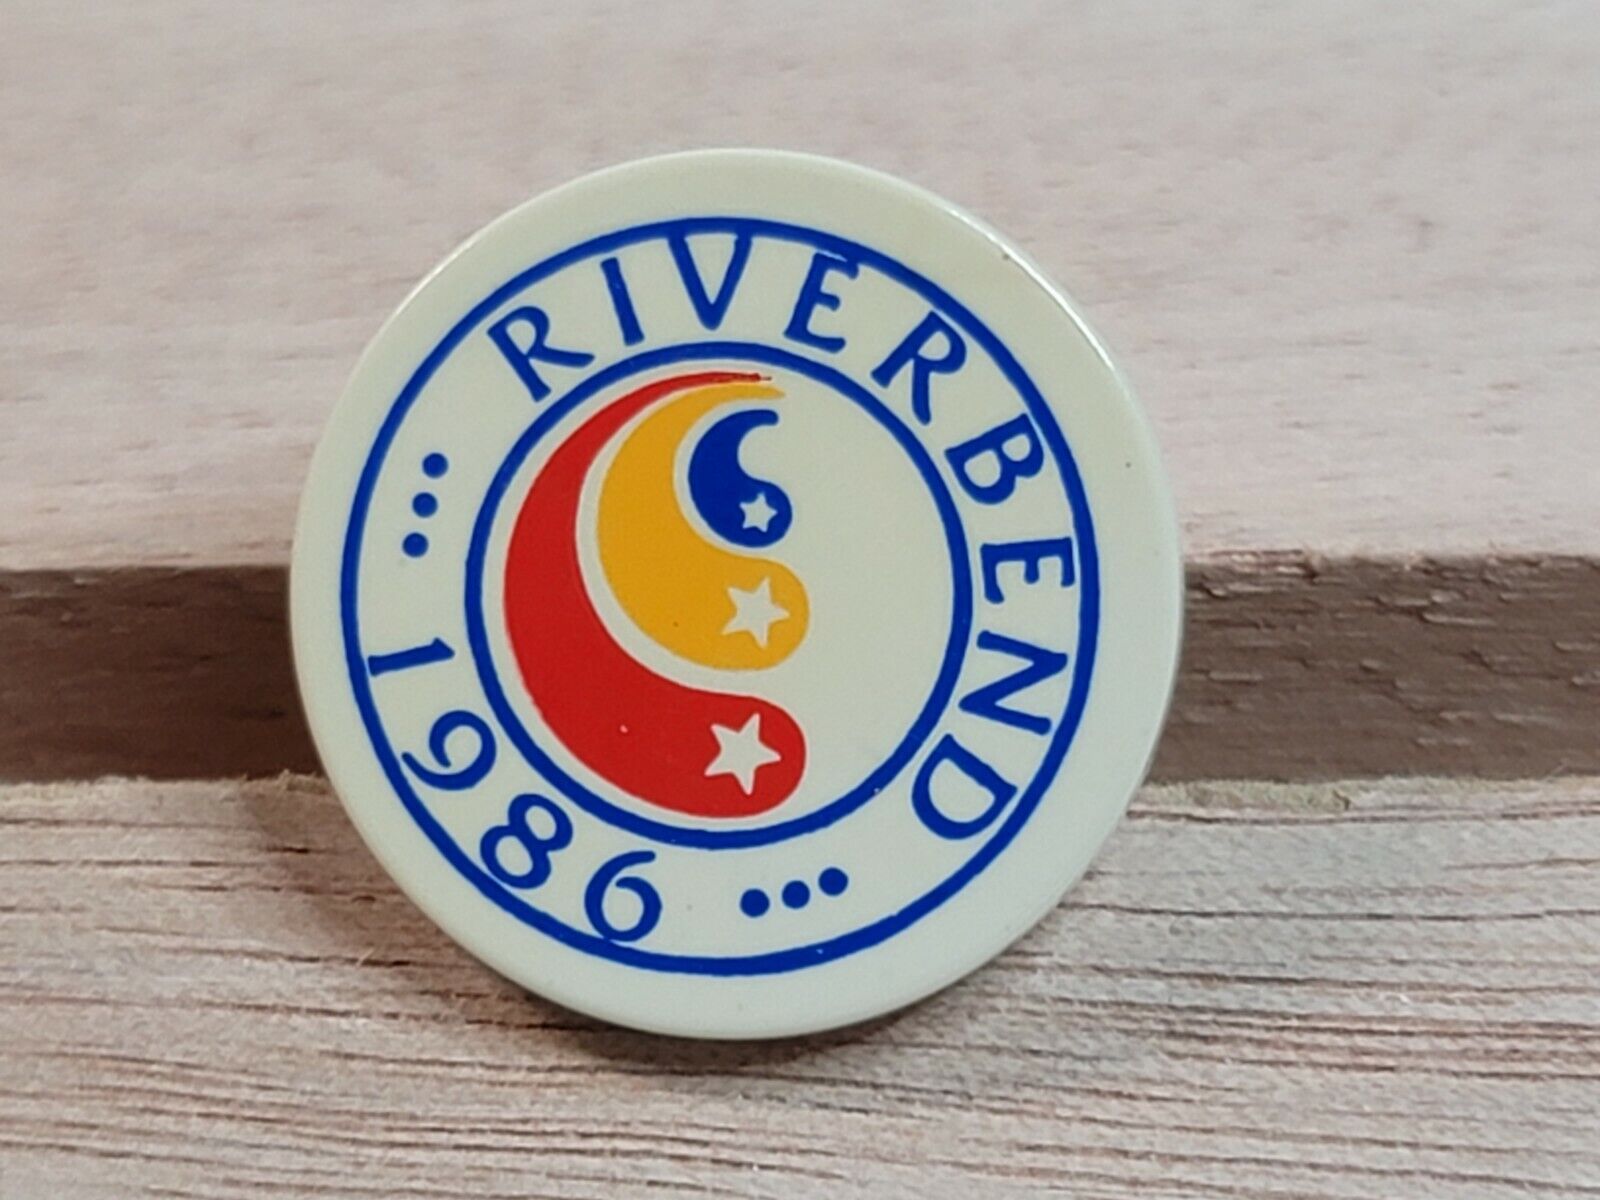 Vintage Riverbend 1986 Lapel Pin - Epic Atlanta Party Spot in the 70s & 80s